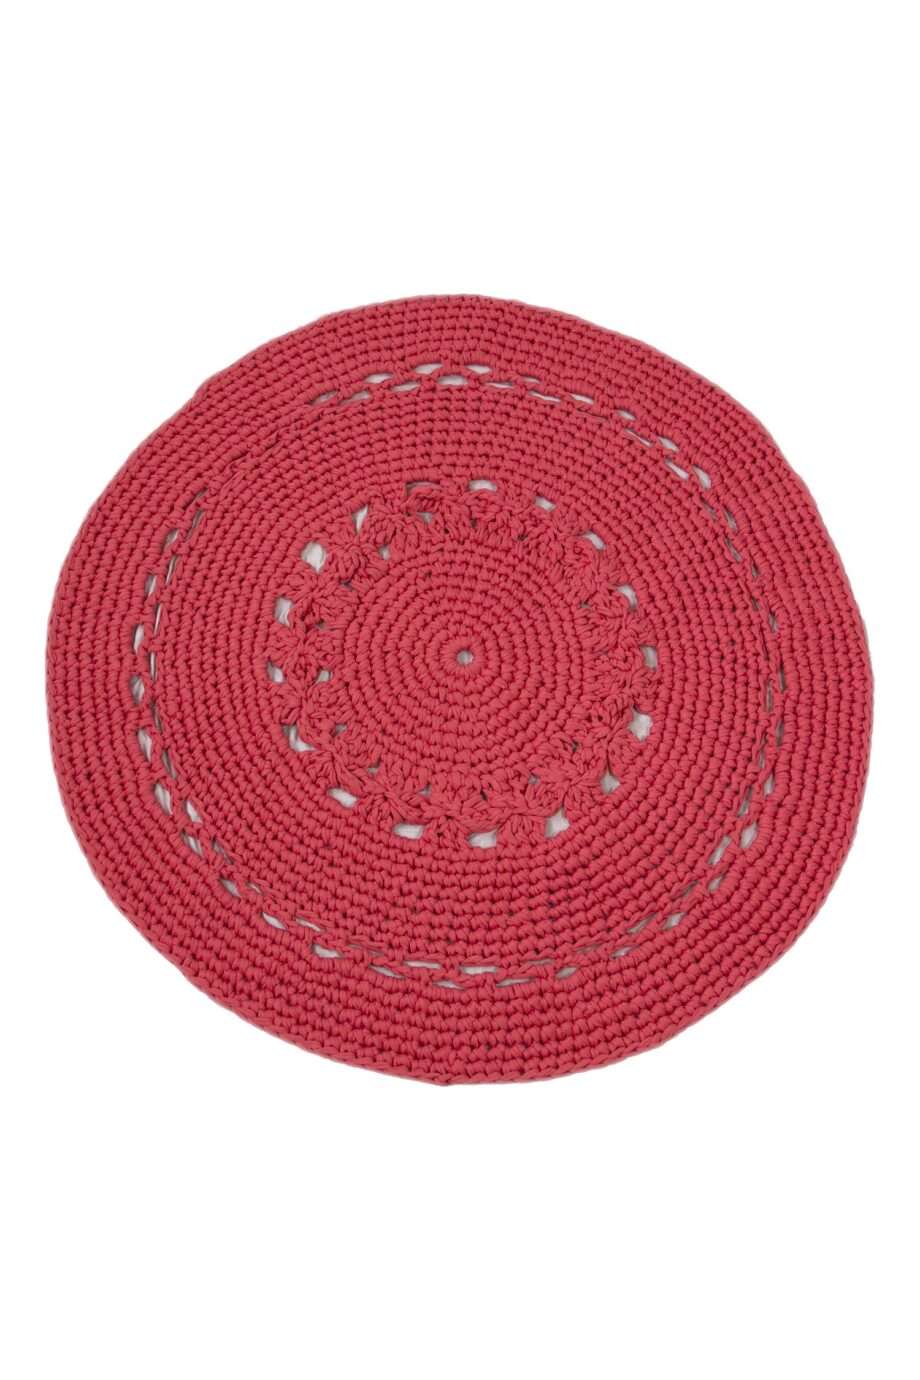 flor red coral crochet cotton rug xlarge